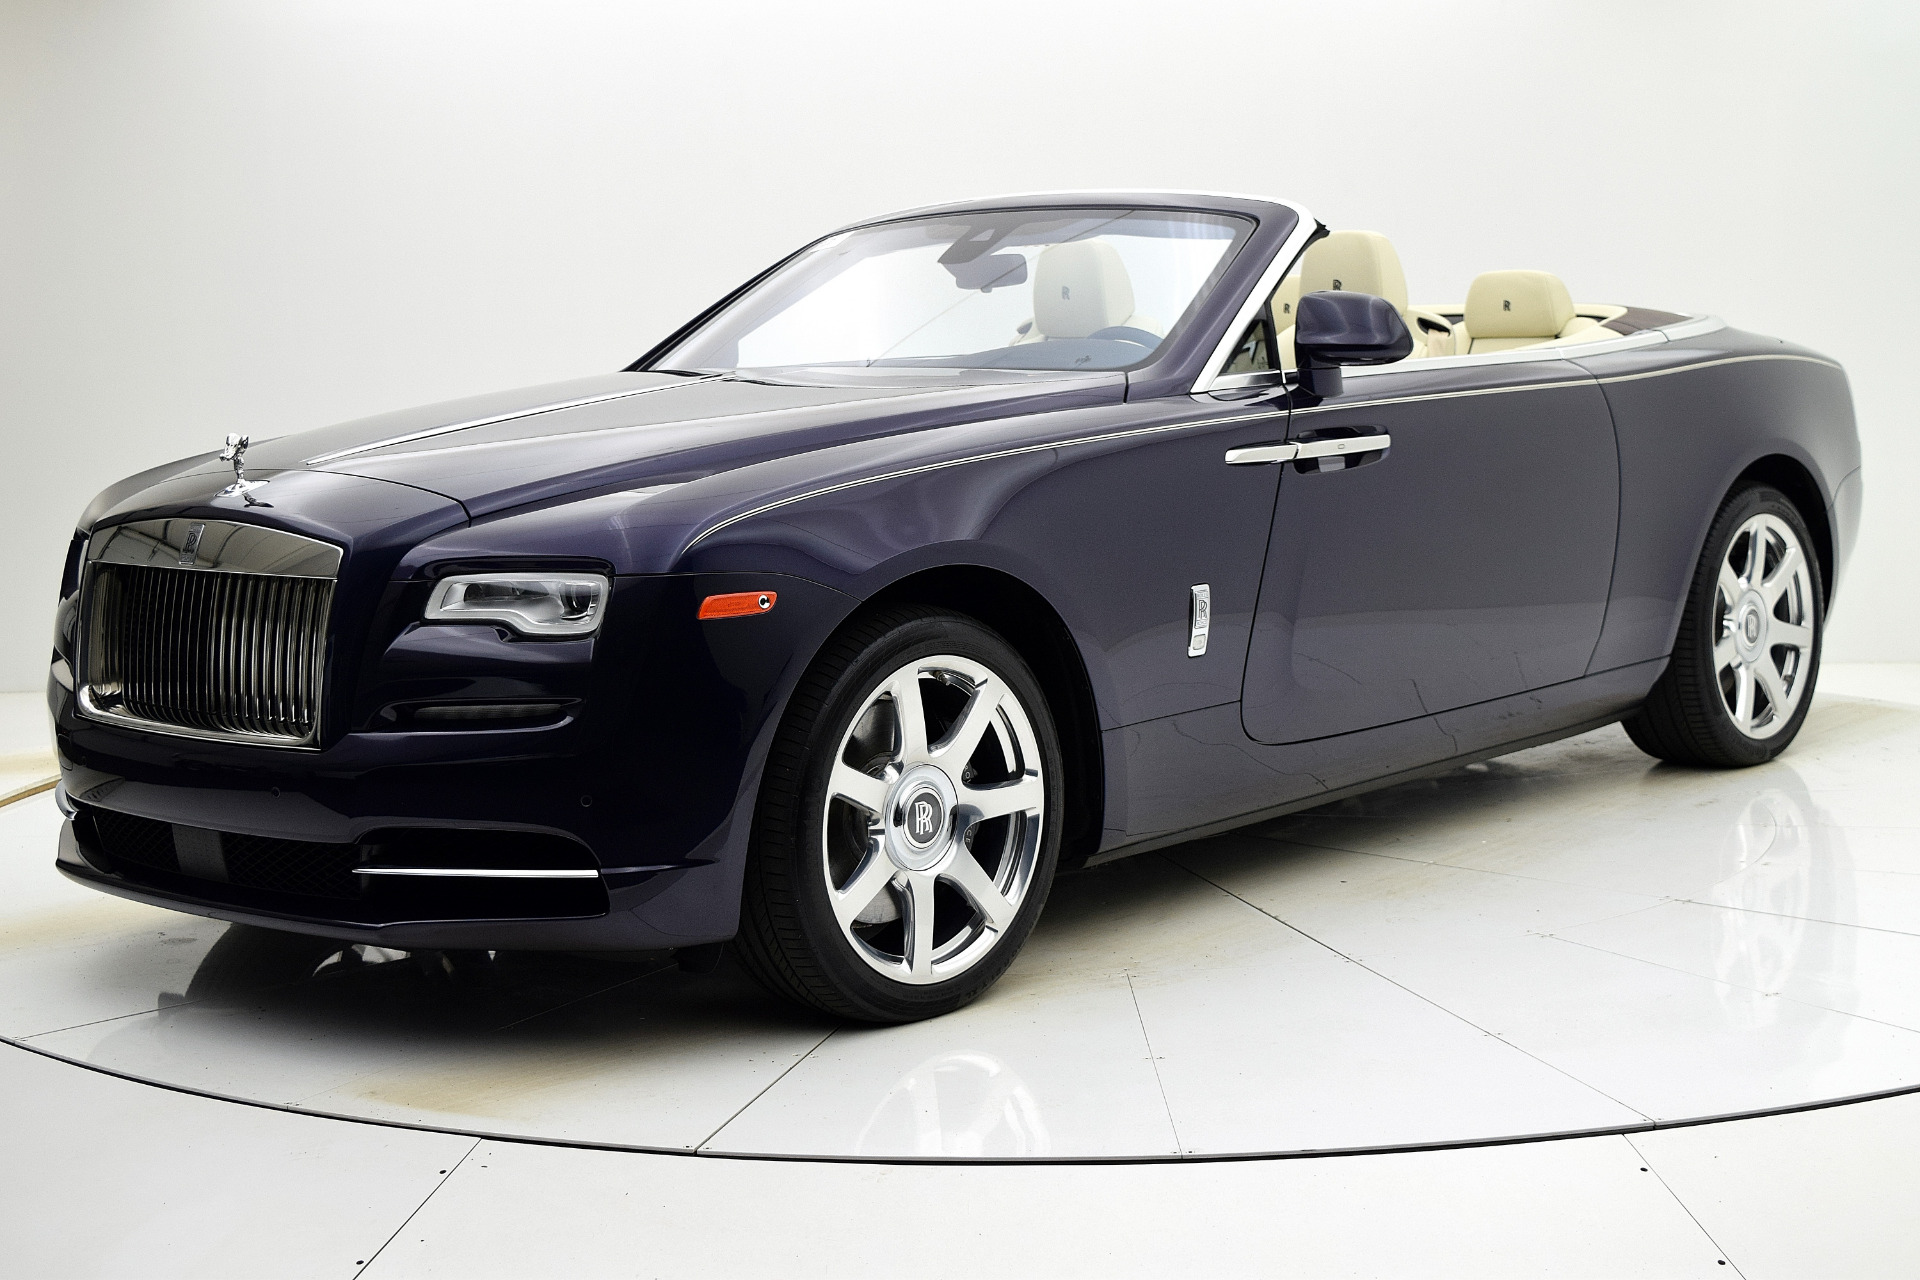 Used 2016 Rolls-Royce Dawn for sale Sold at Bentley Palmyra N.J. in Palmyra NJ 08065 2